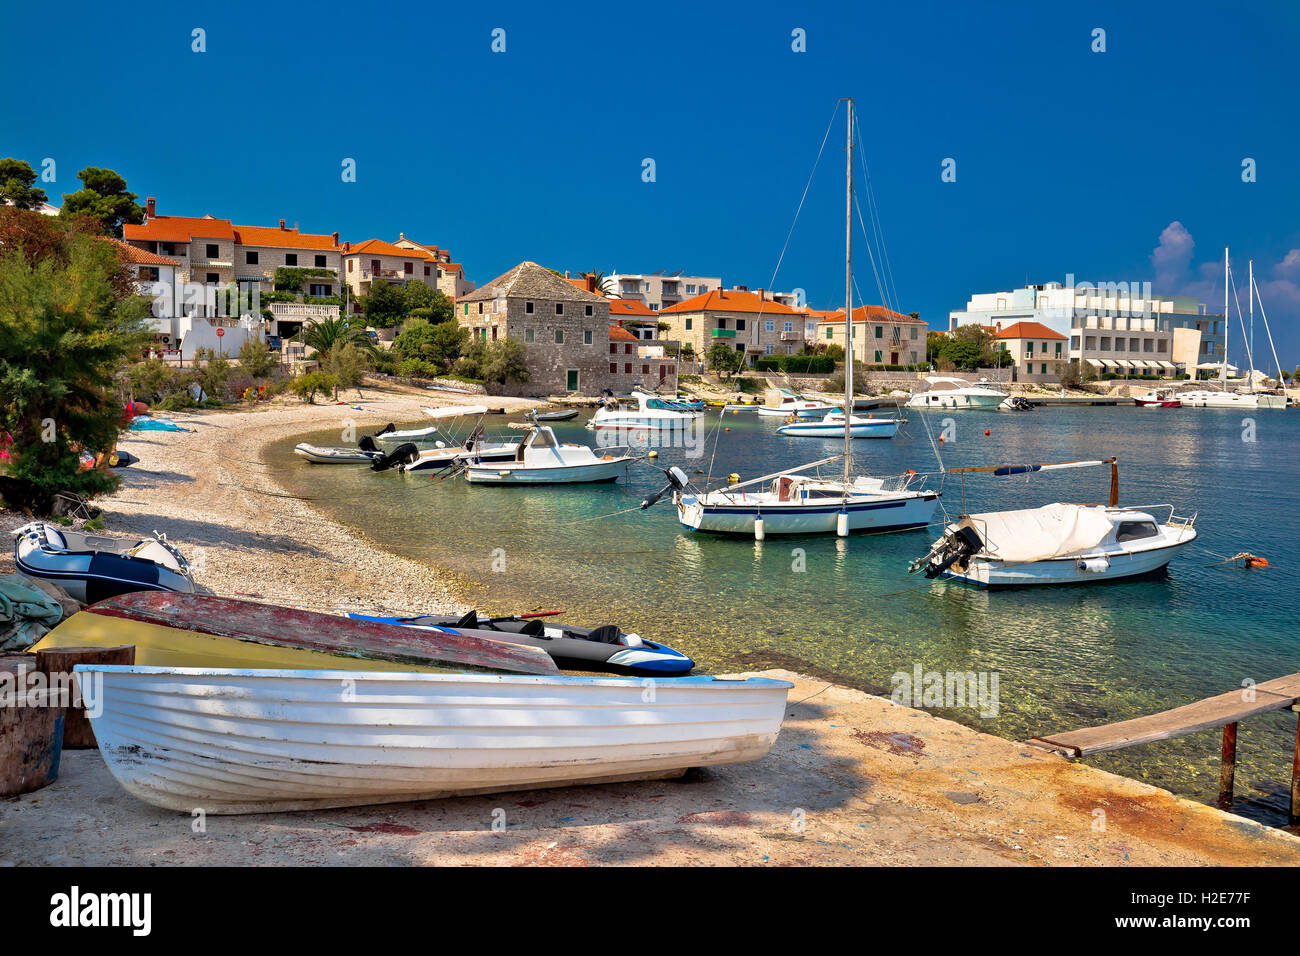 Dalmatian beach in Postira village, Island of Brac, Croatia Stock Photo